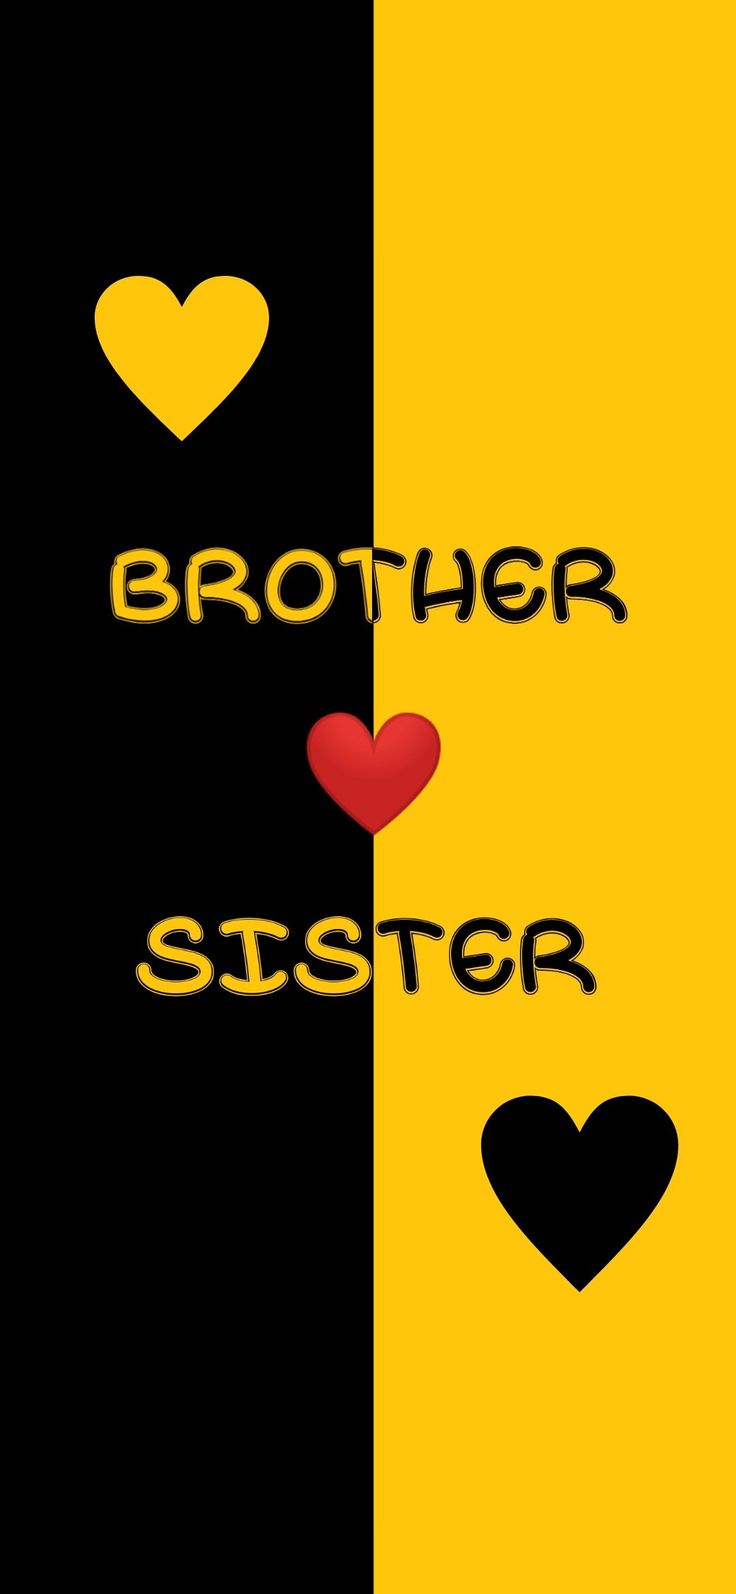 Brother Sister wallpaper by Jadaun Editz. Sister wallpaper, Brother sister photography, Brother and sister love